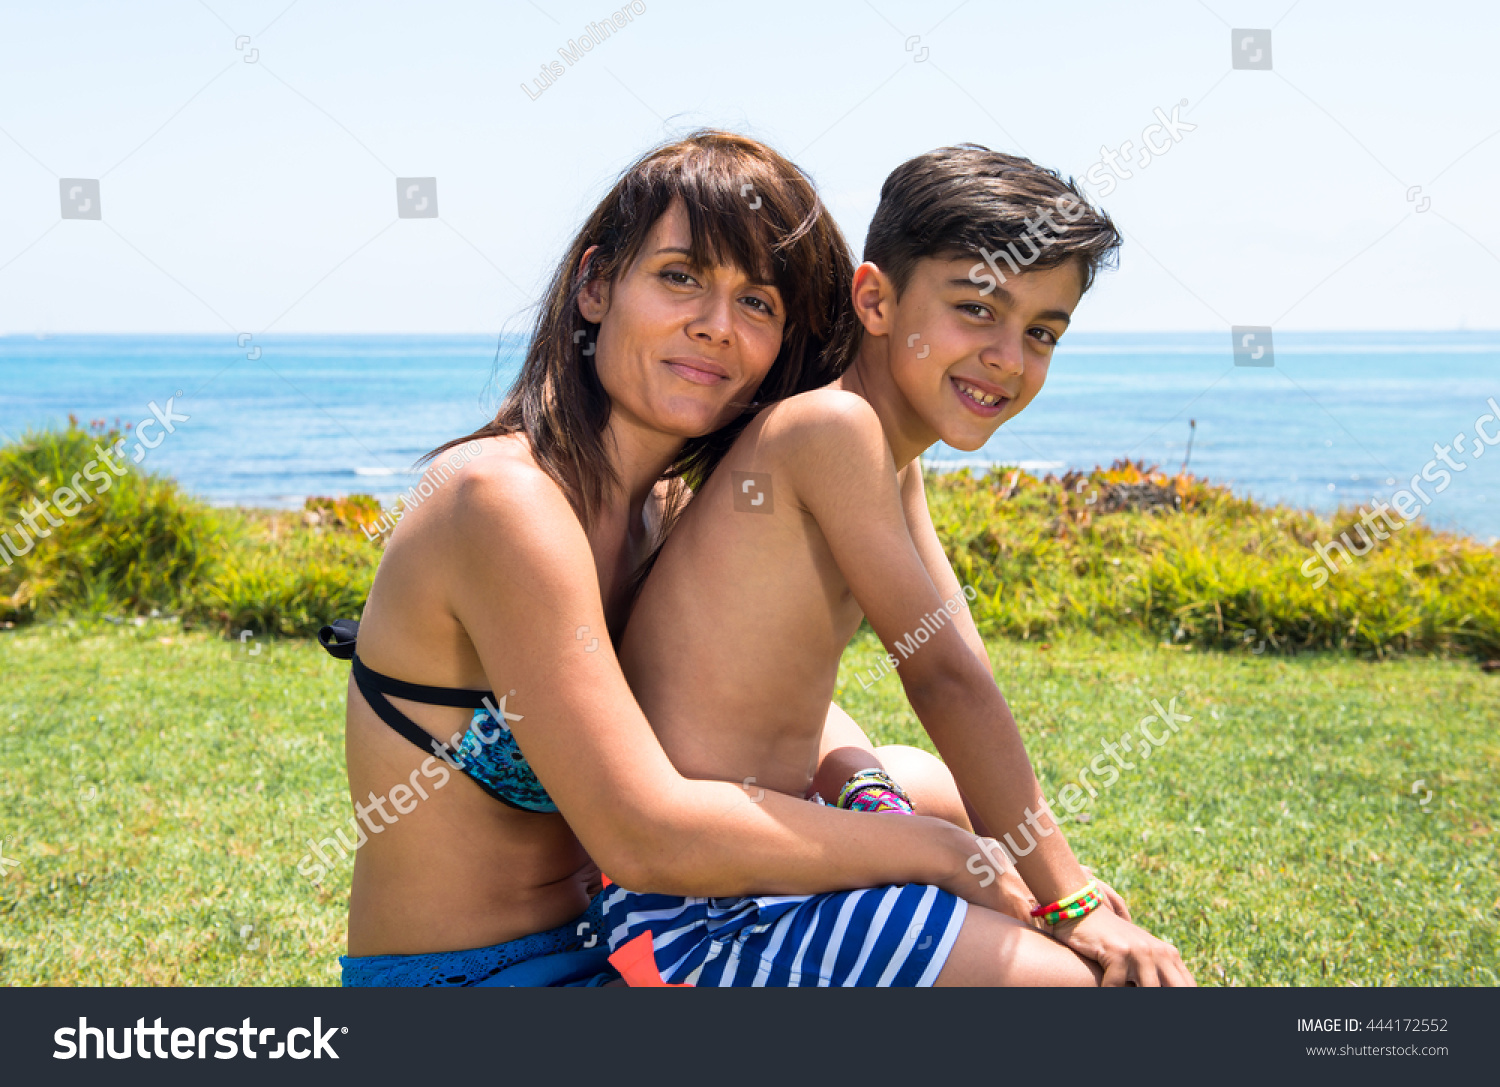 darrin tharp add photo mother son nude beach